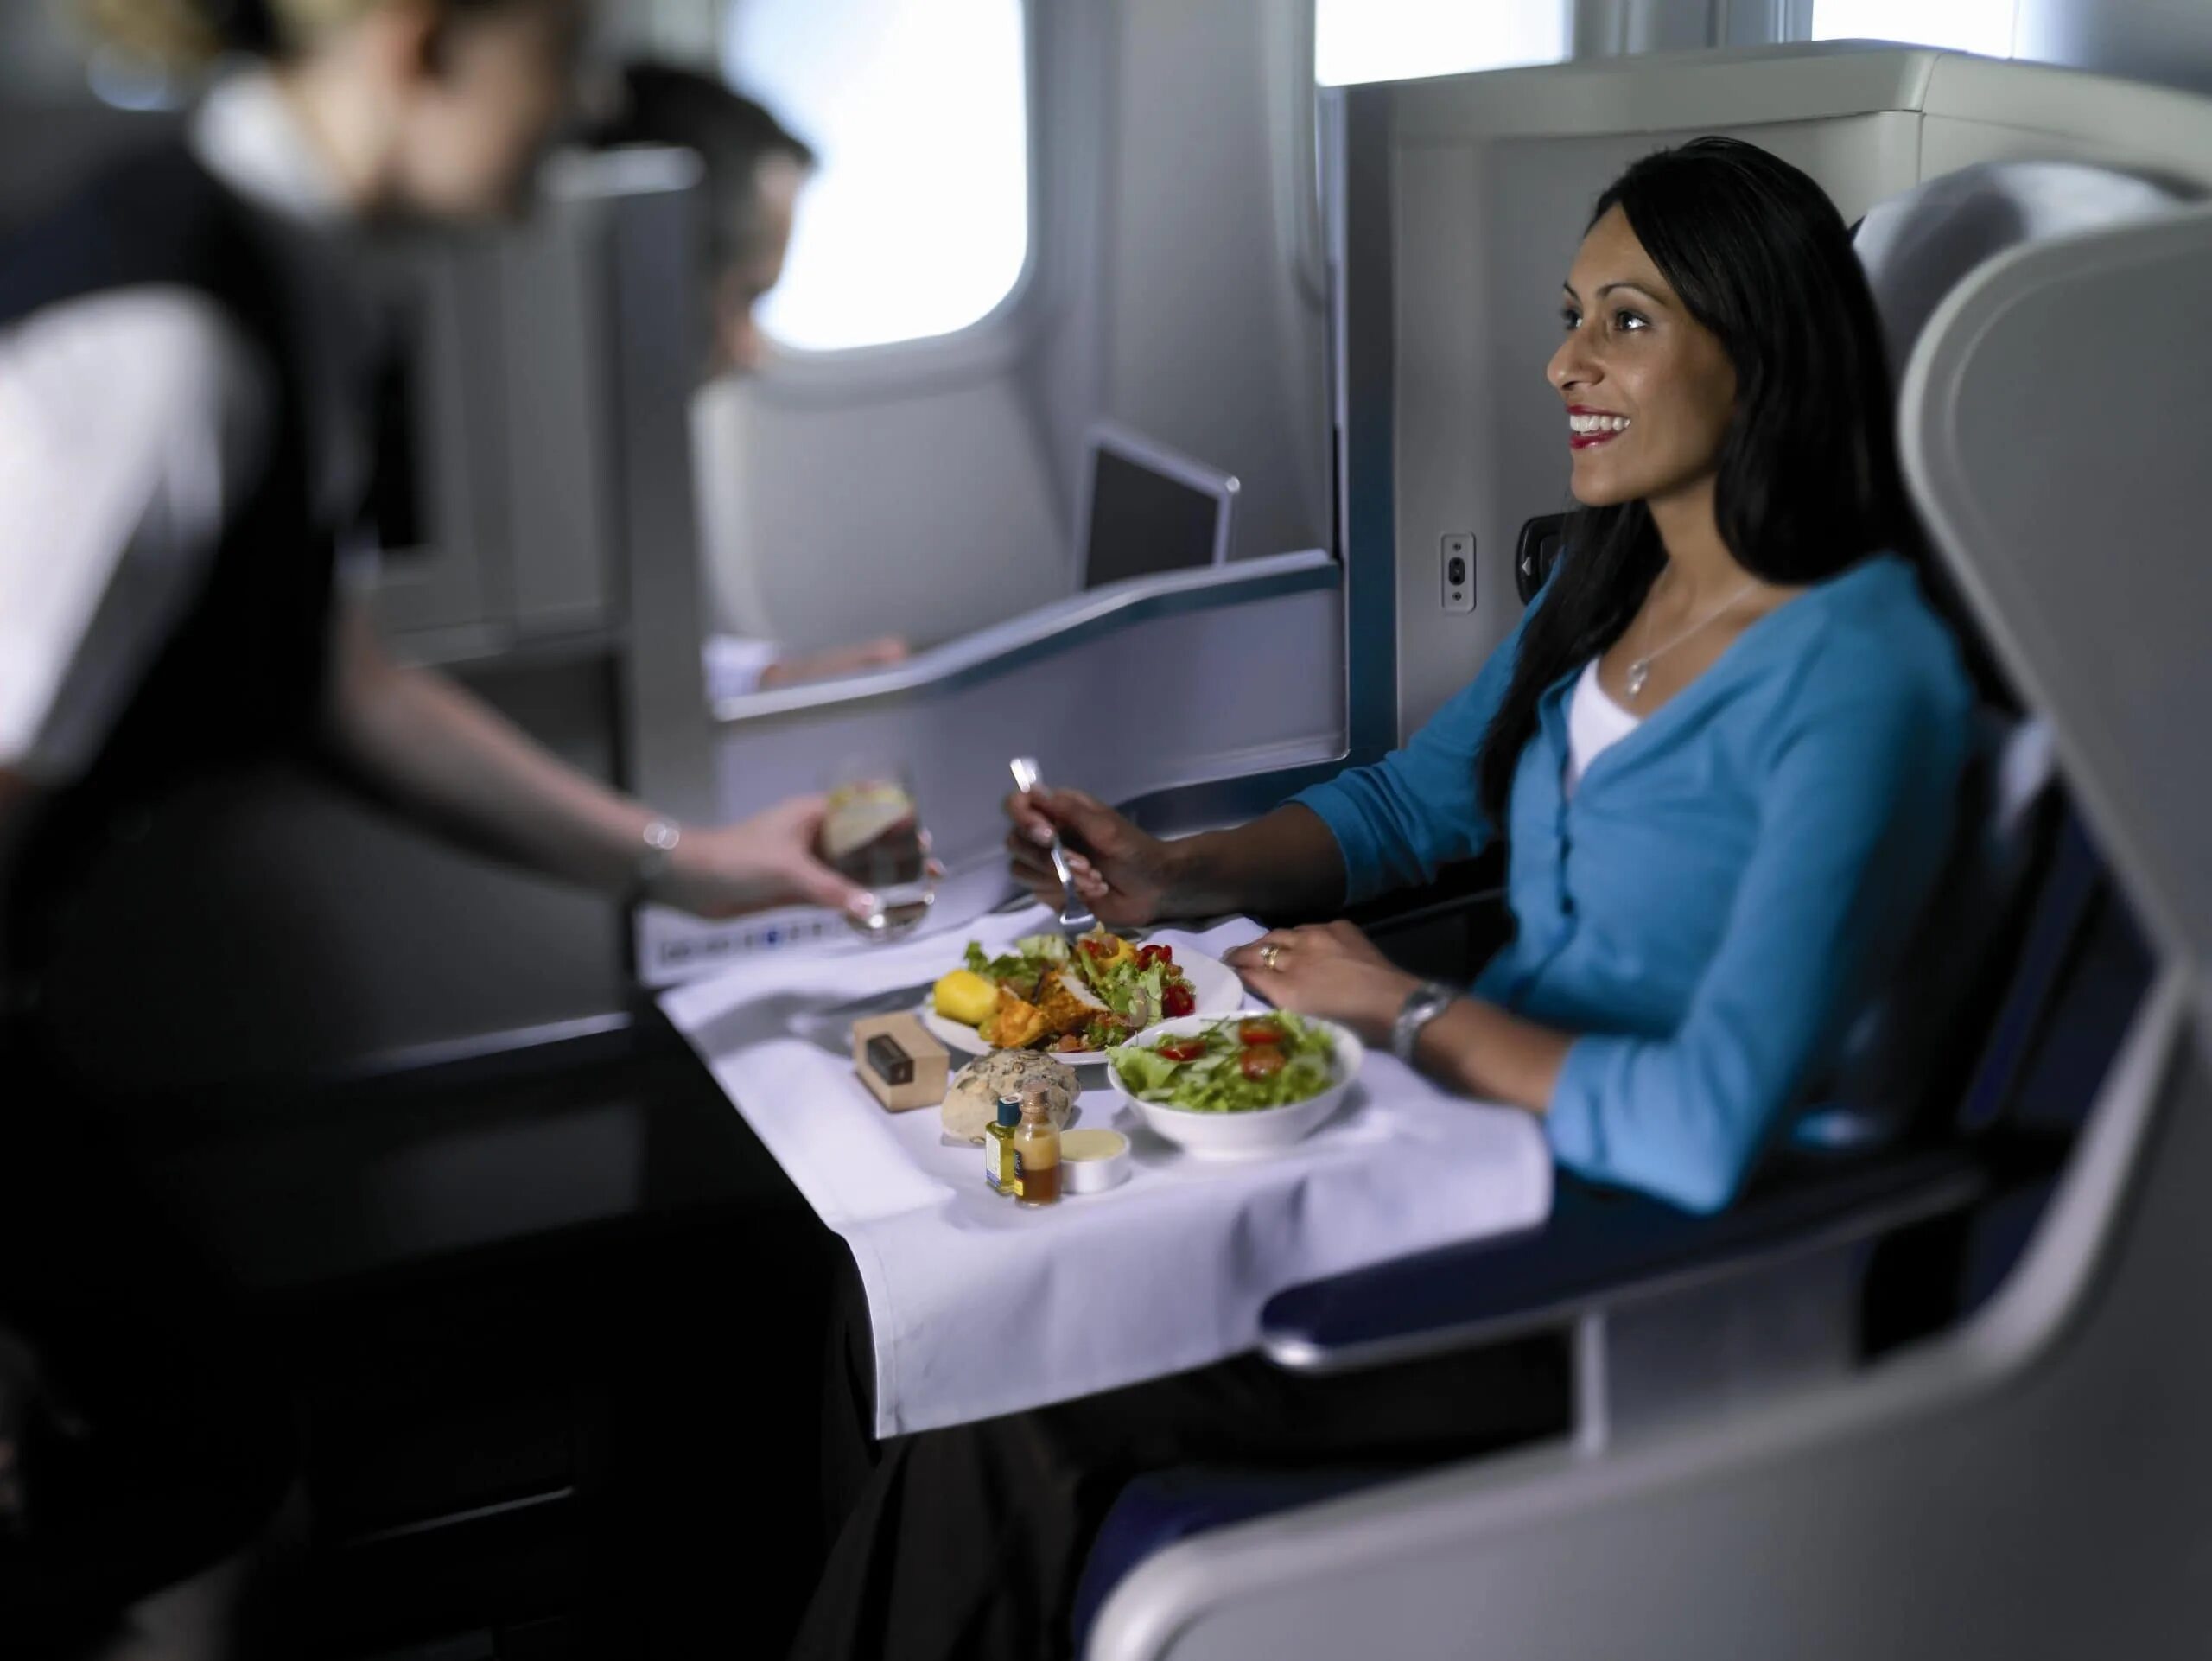 Boarding travel. British Airways Business class еда. Еда в самолете. Стюардесса с едой. Еда на борту самолета.